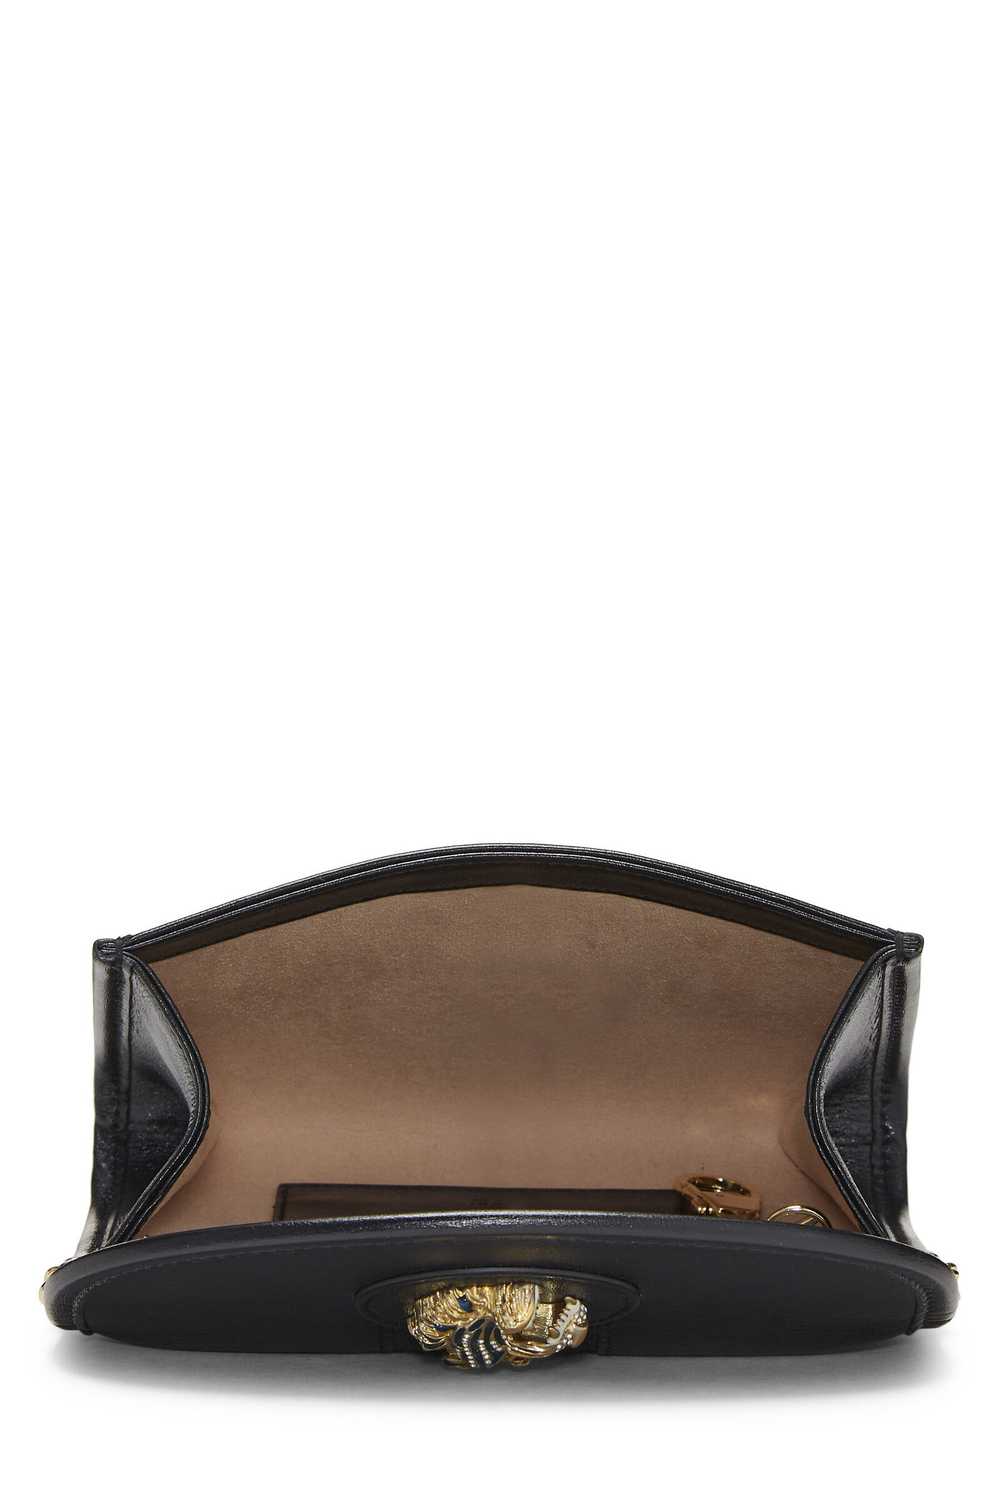 Black Leather Web Rajah Shoulder Bag Mini - image 6